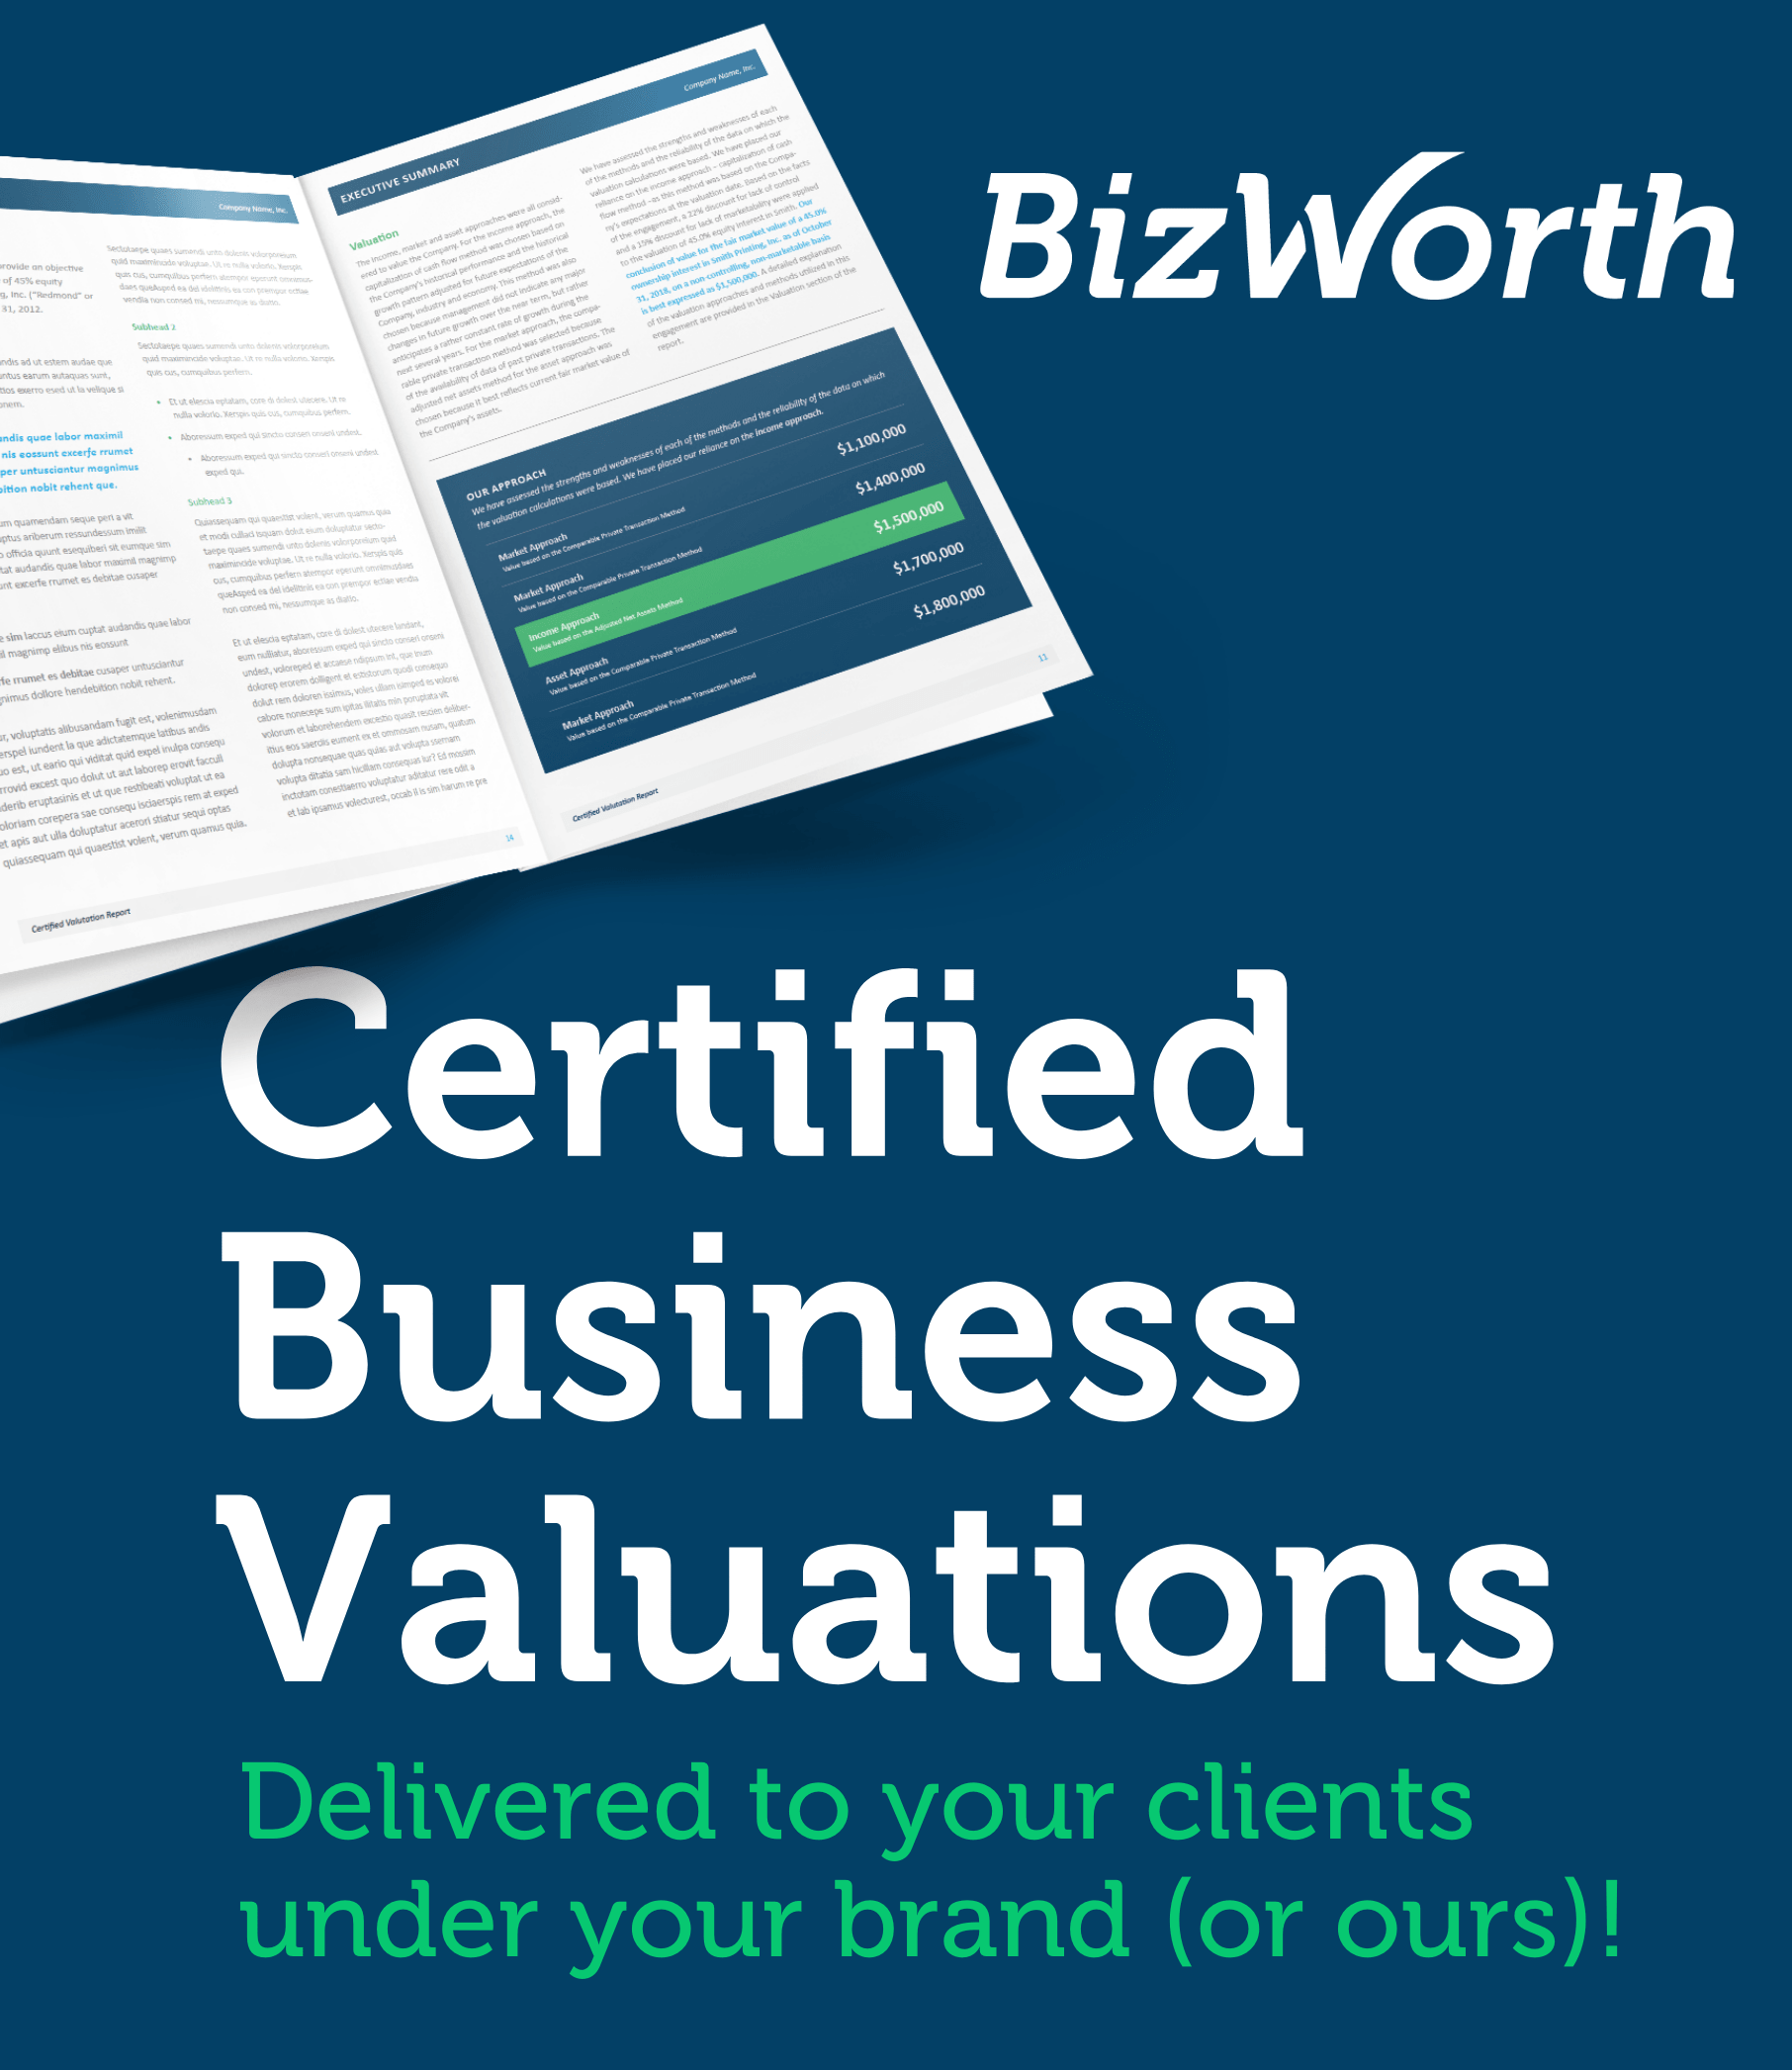 bizworth certified business valuations branding